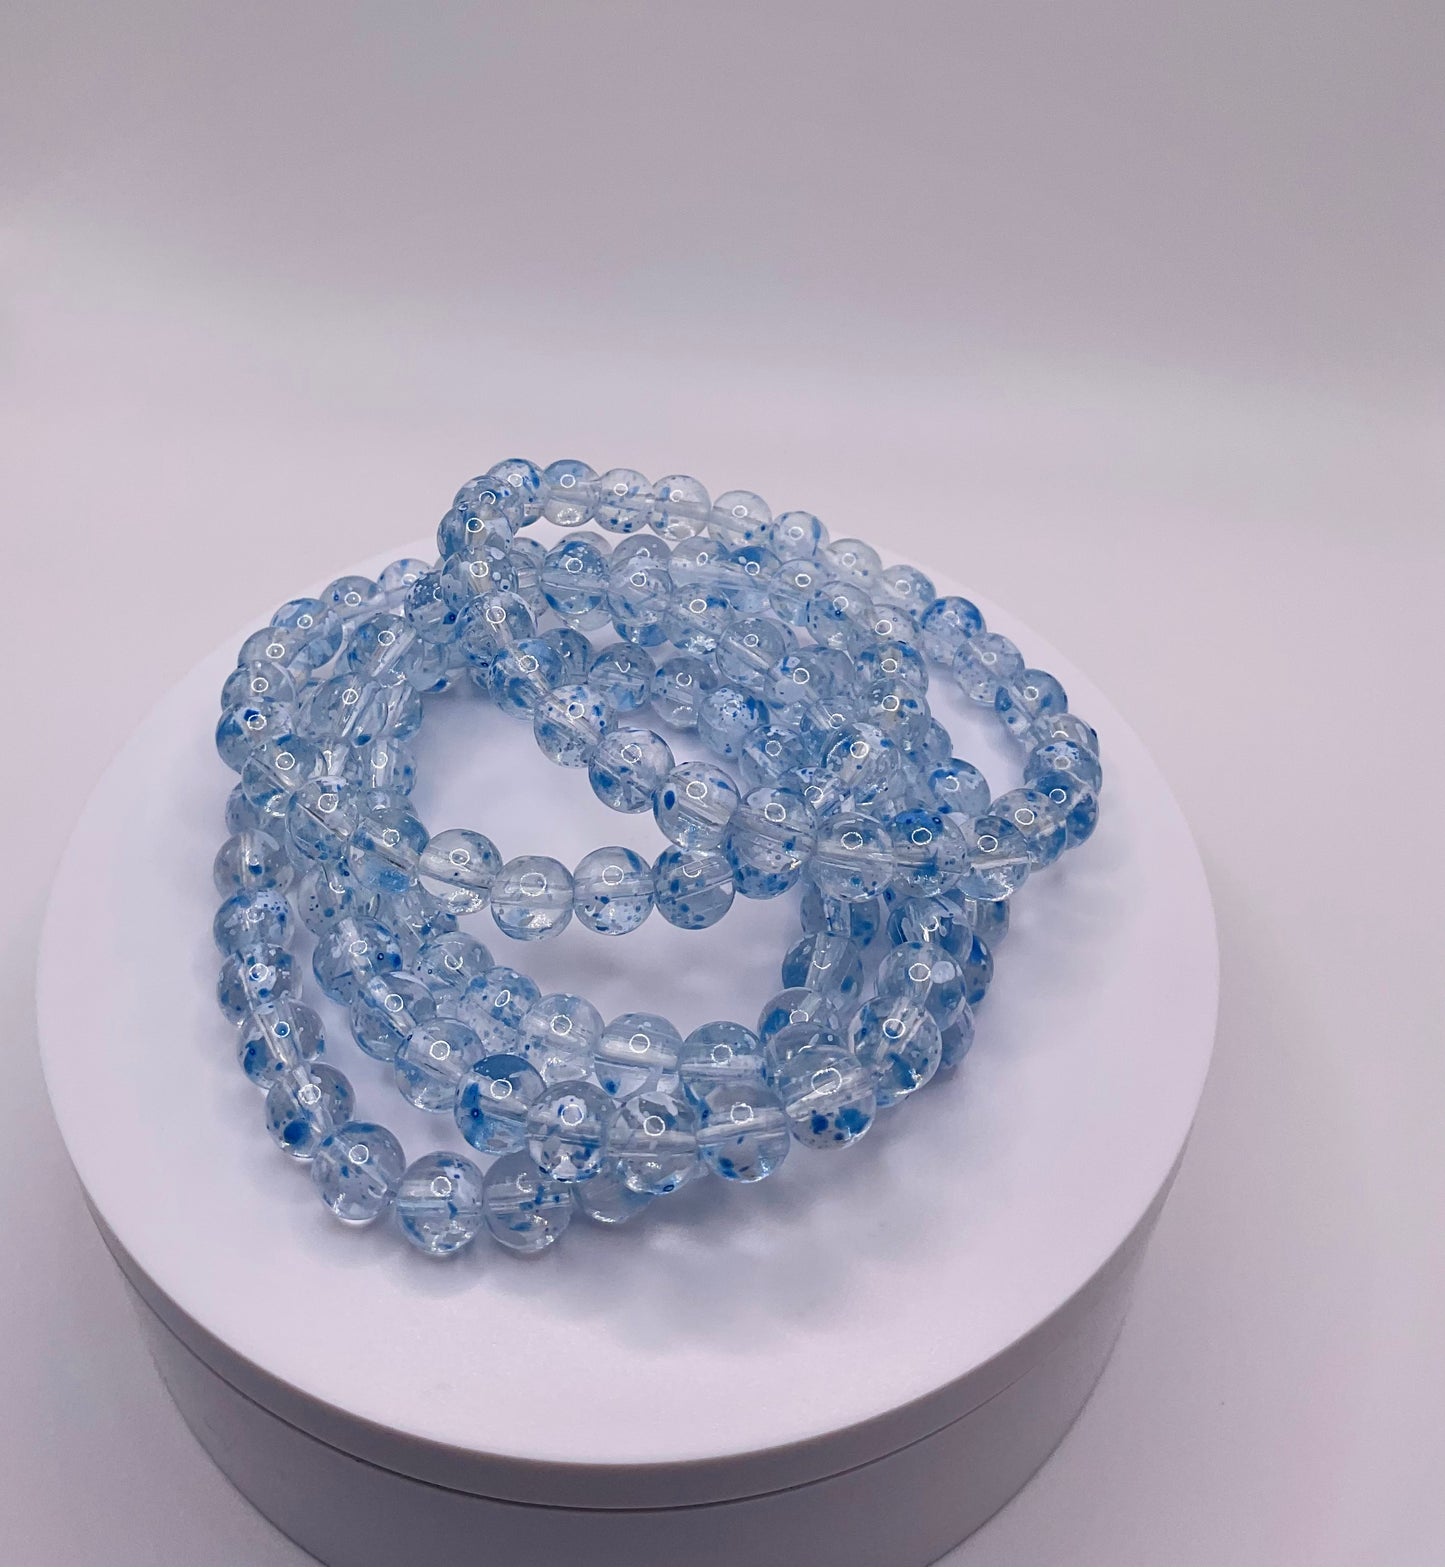 Blue ocean bracelet